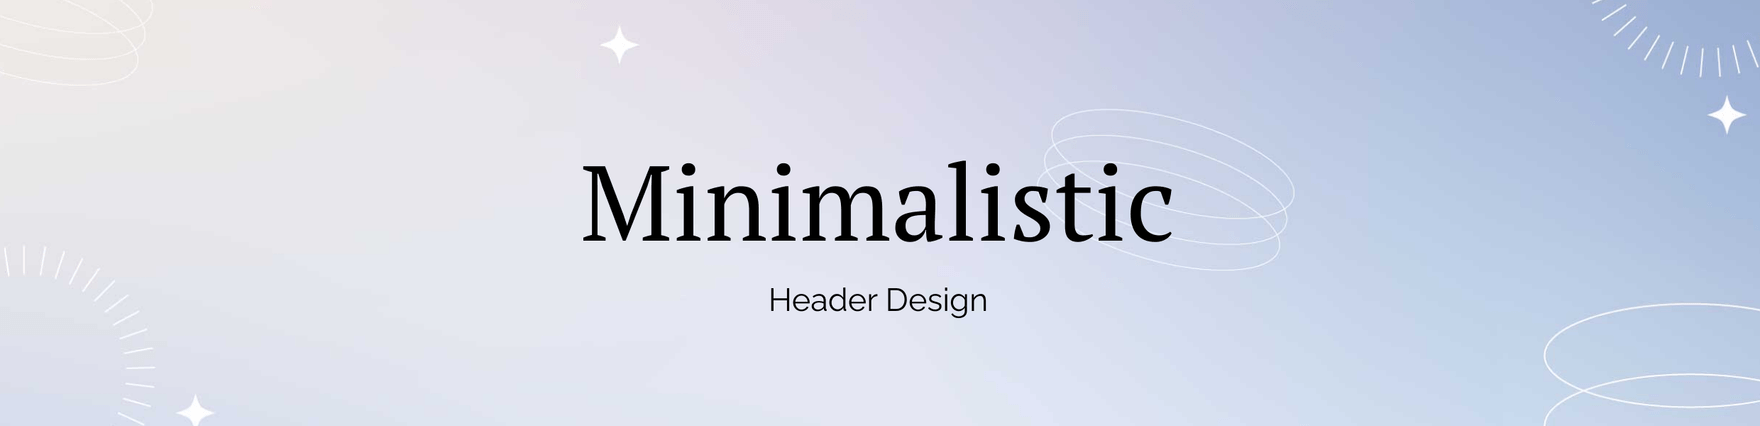 Minimalistic Header Design Template